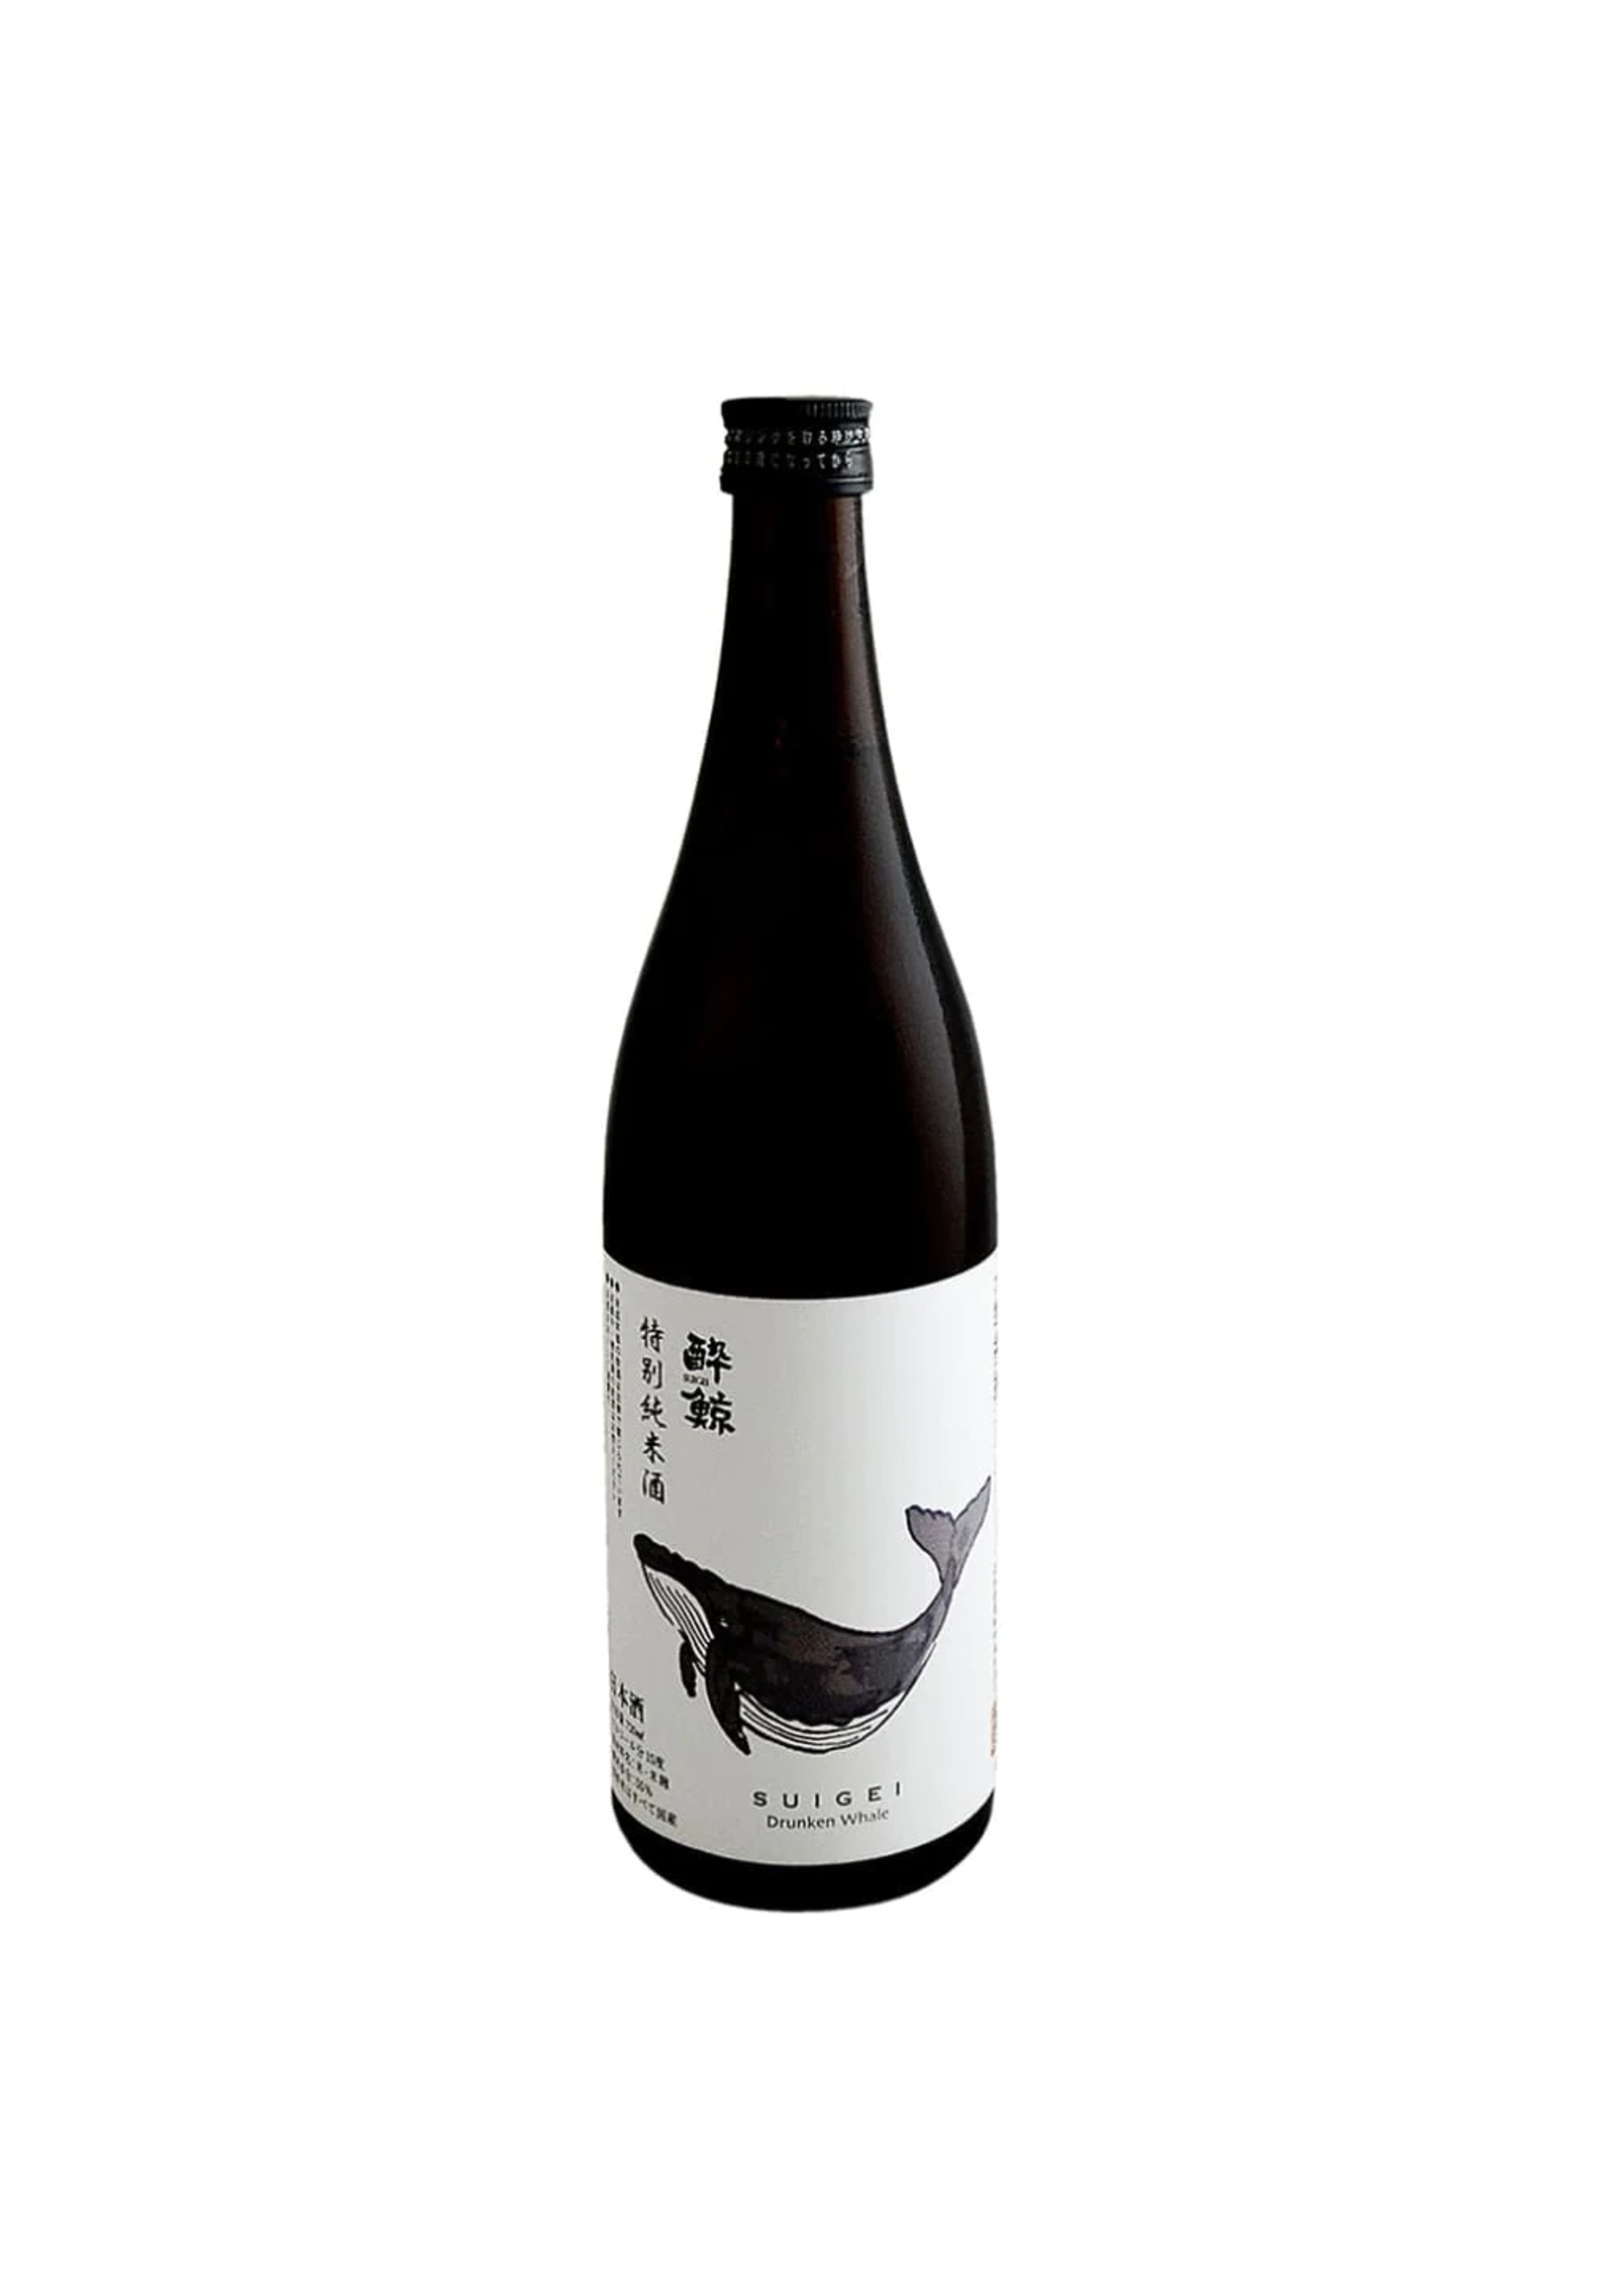 Suigei Shuzo Suigei Shuzo / Drunken Whale Tokubetsu Junmai Sake / 1.8L